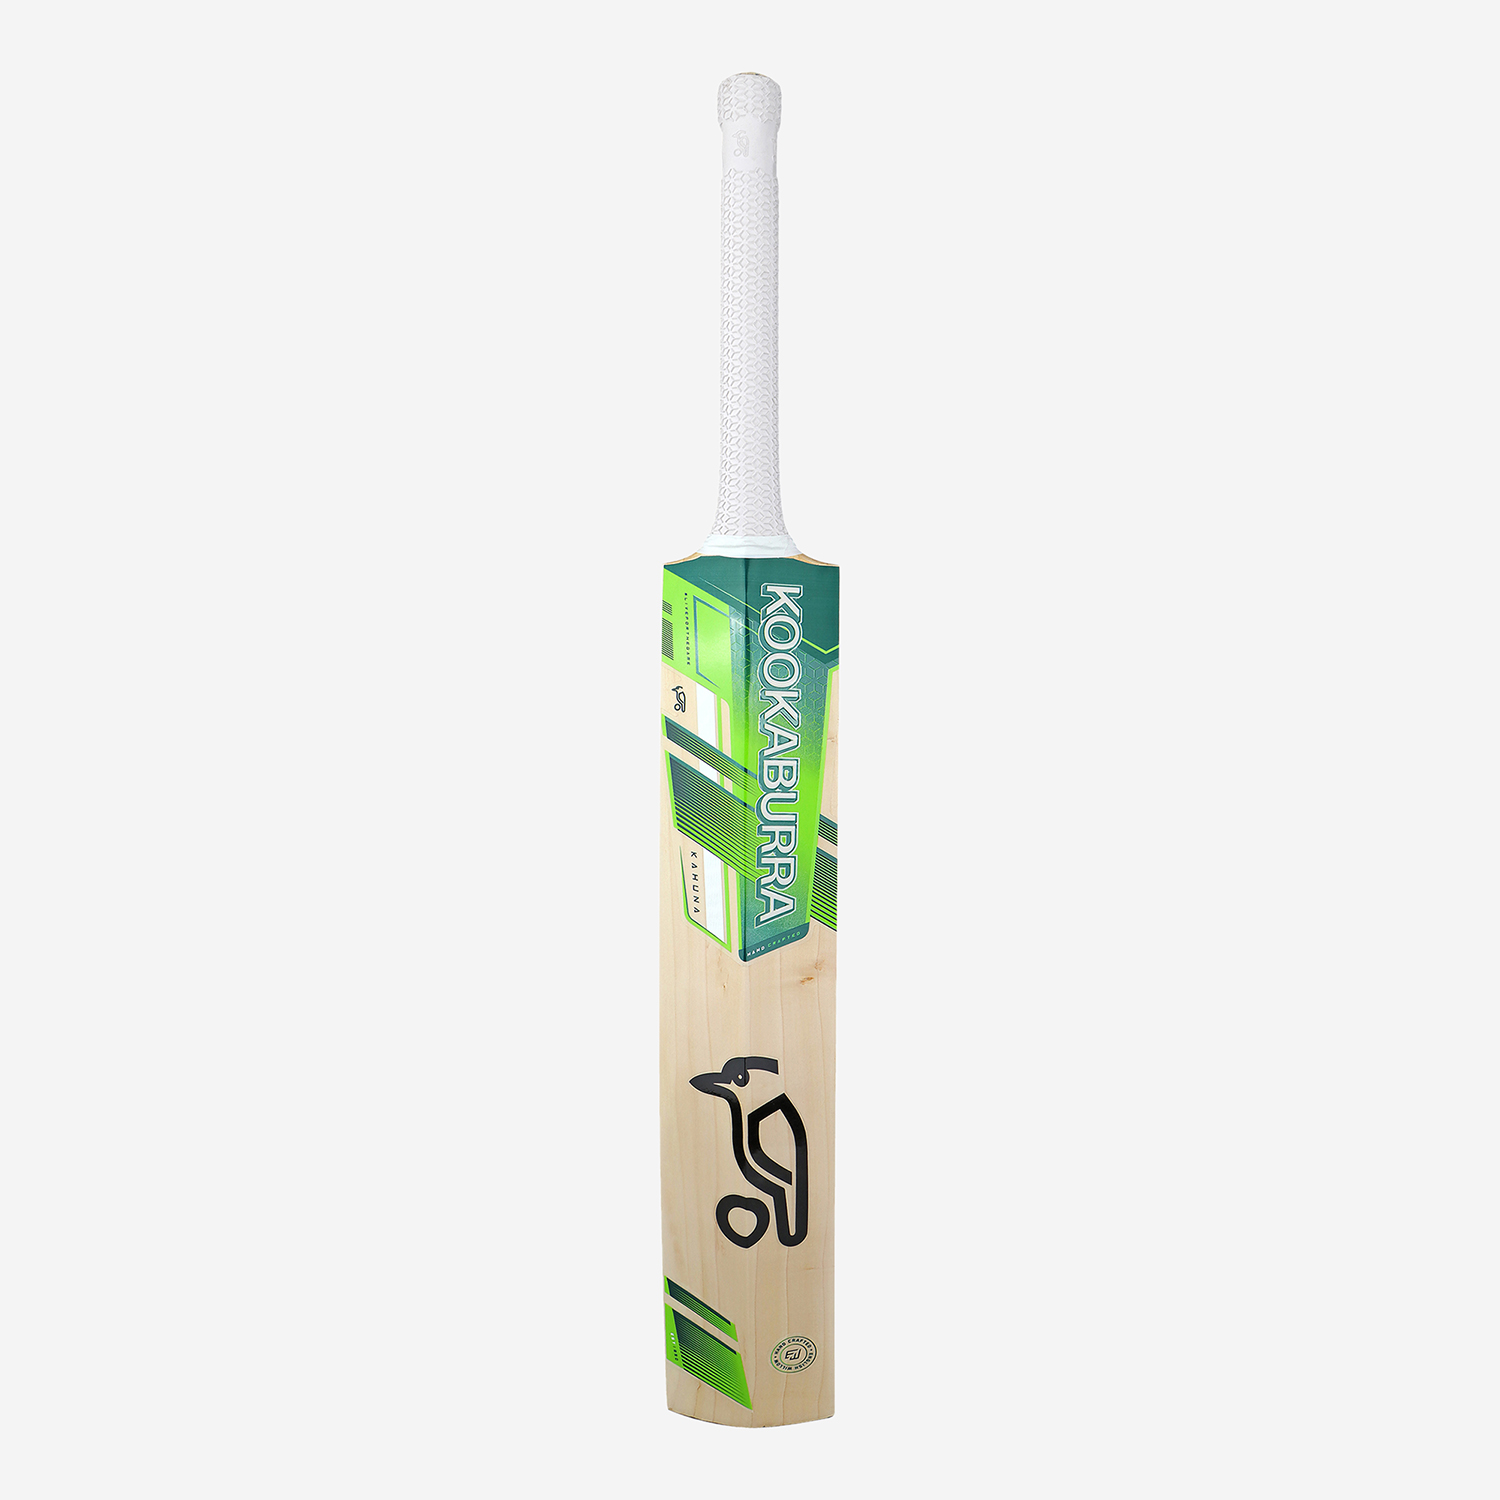 Pro 3.0 Kahuna Senior Cricket Bat